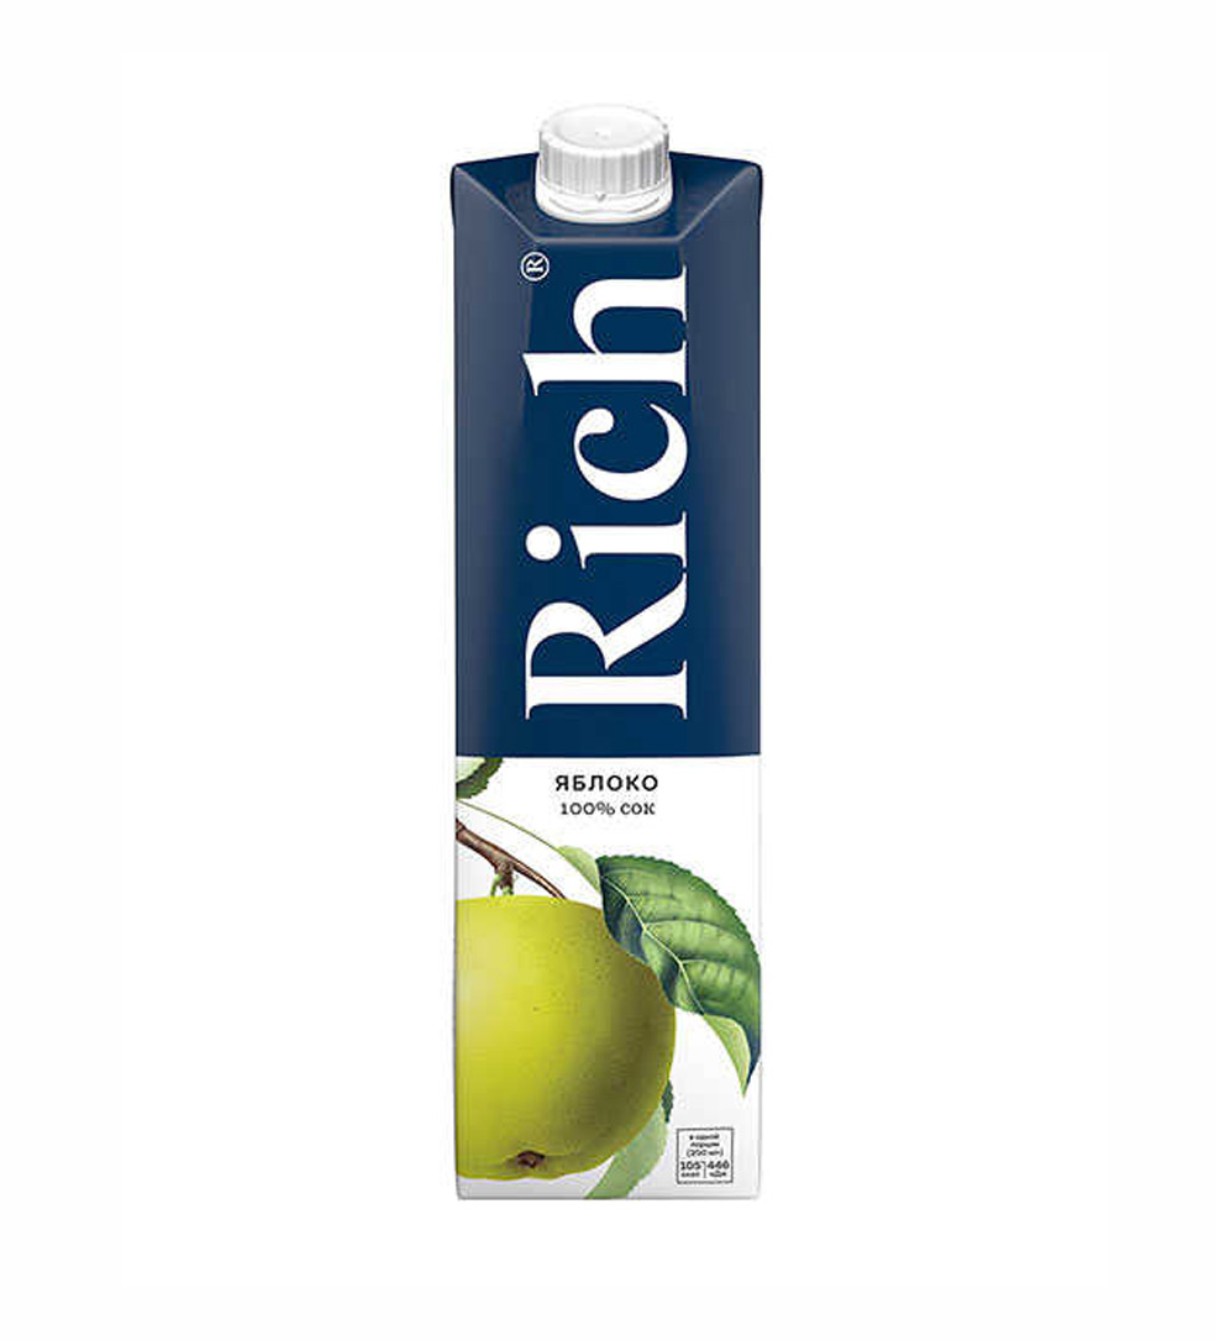 Сок Rich яблоко, tetrapak (1L)